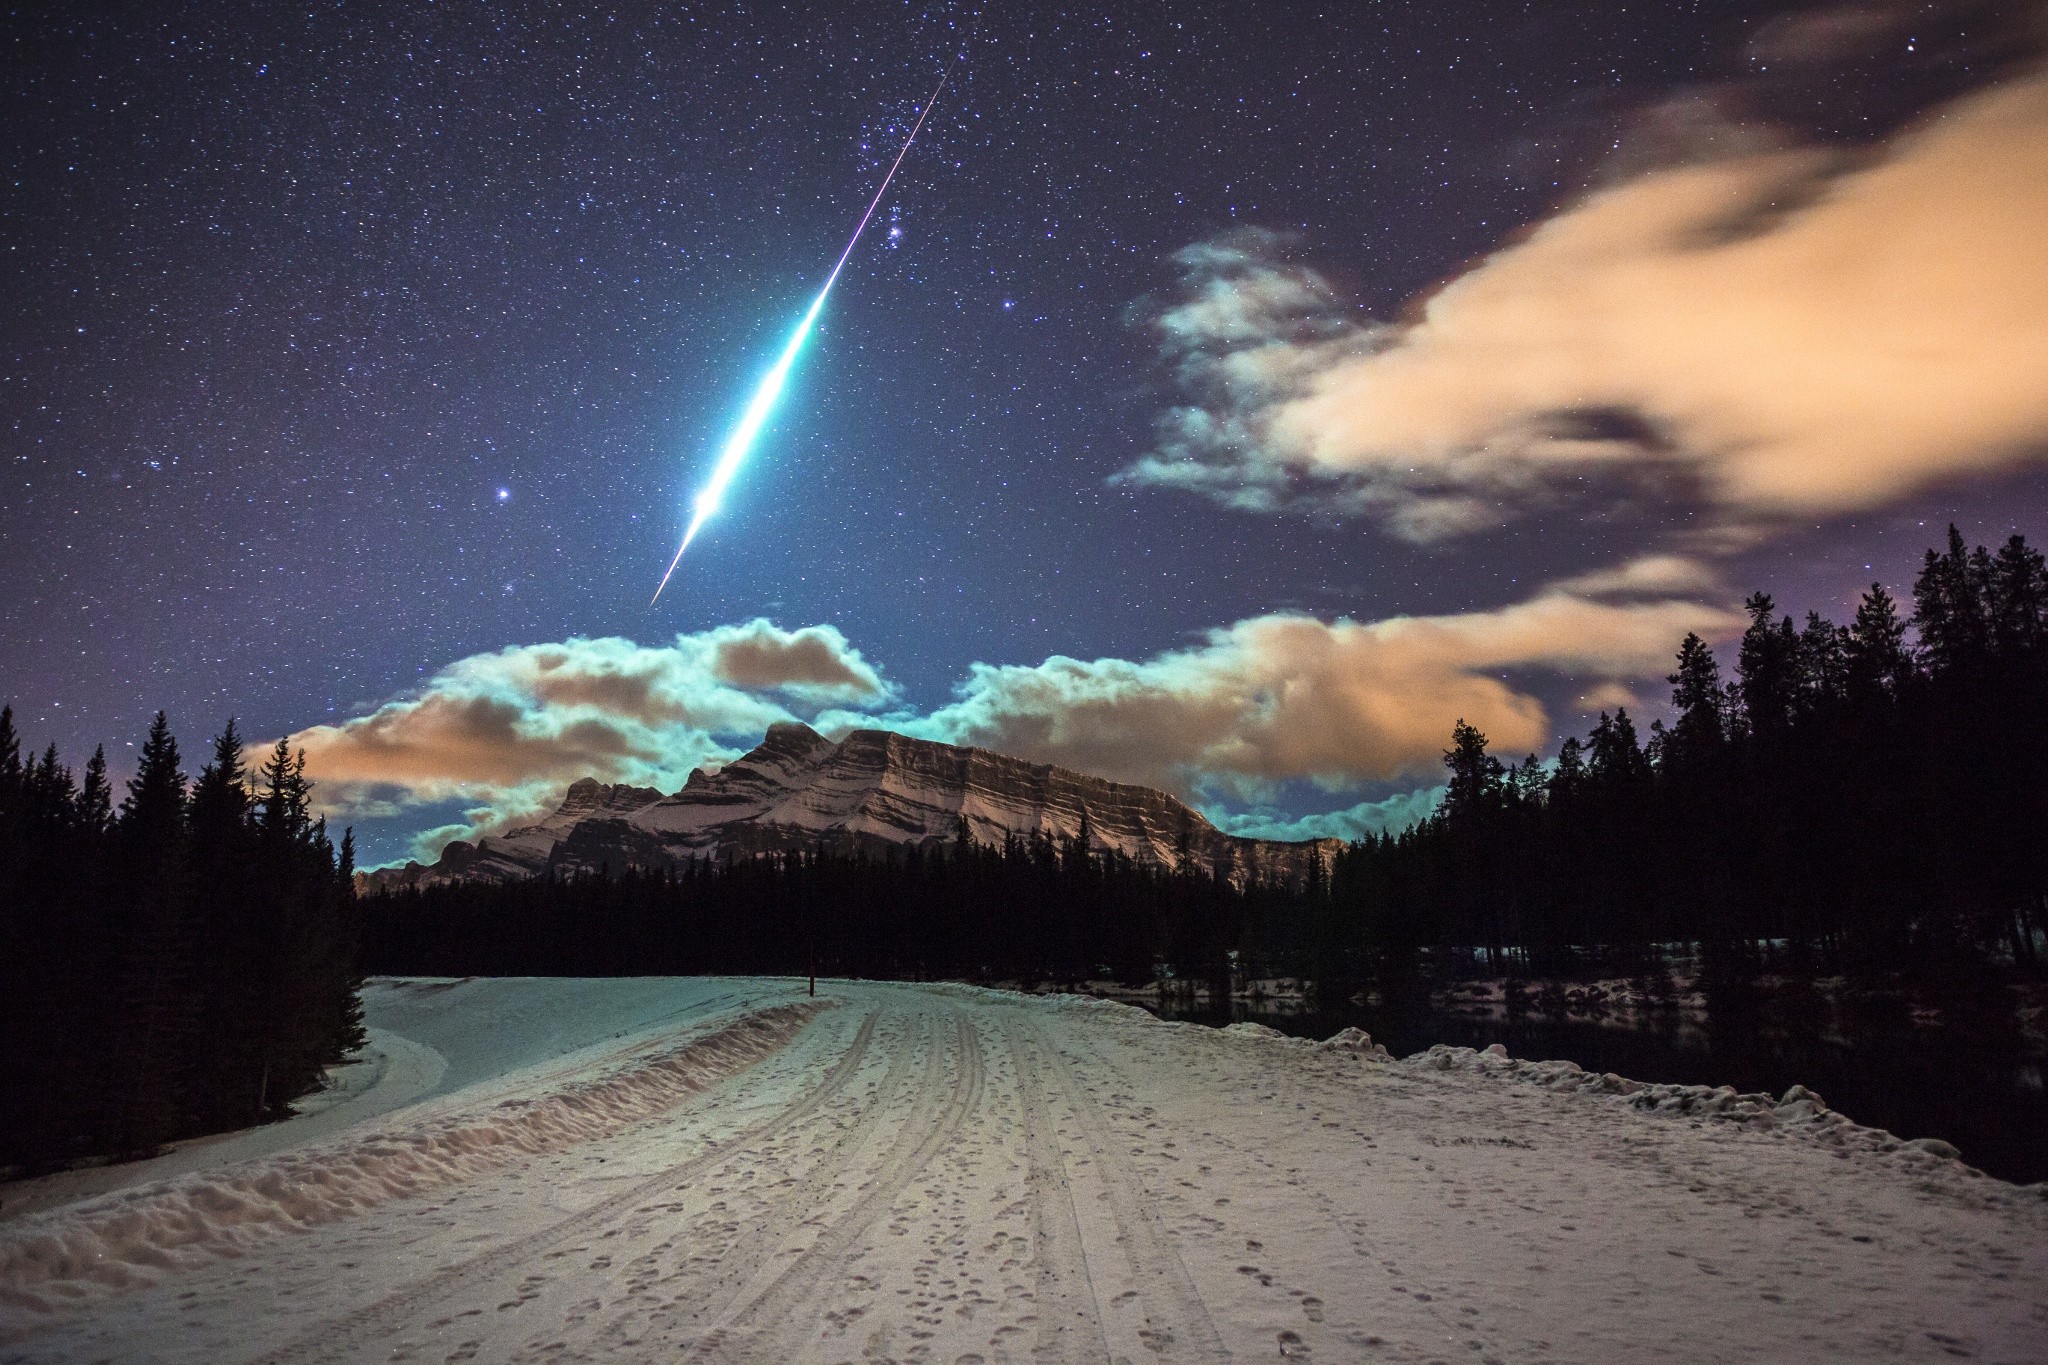 General 2048x1365 space shooting stars meteorite snow comet winter nature outdoors sky clouds